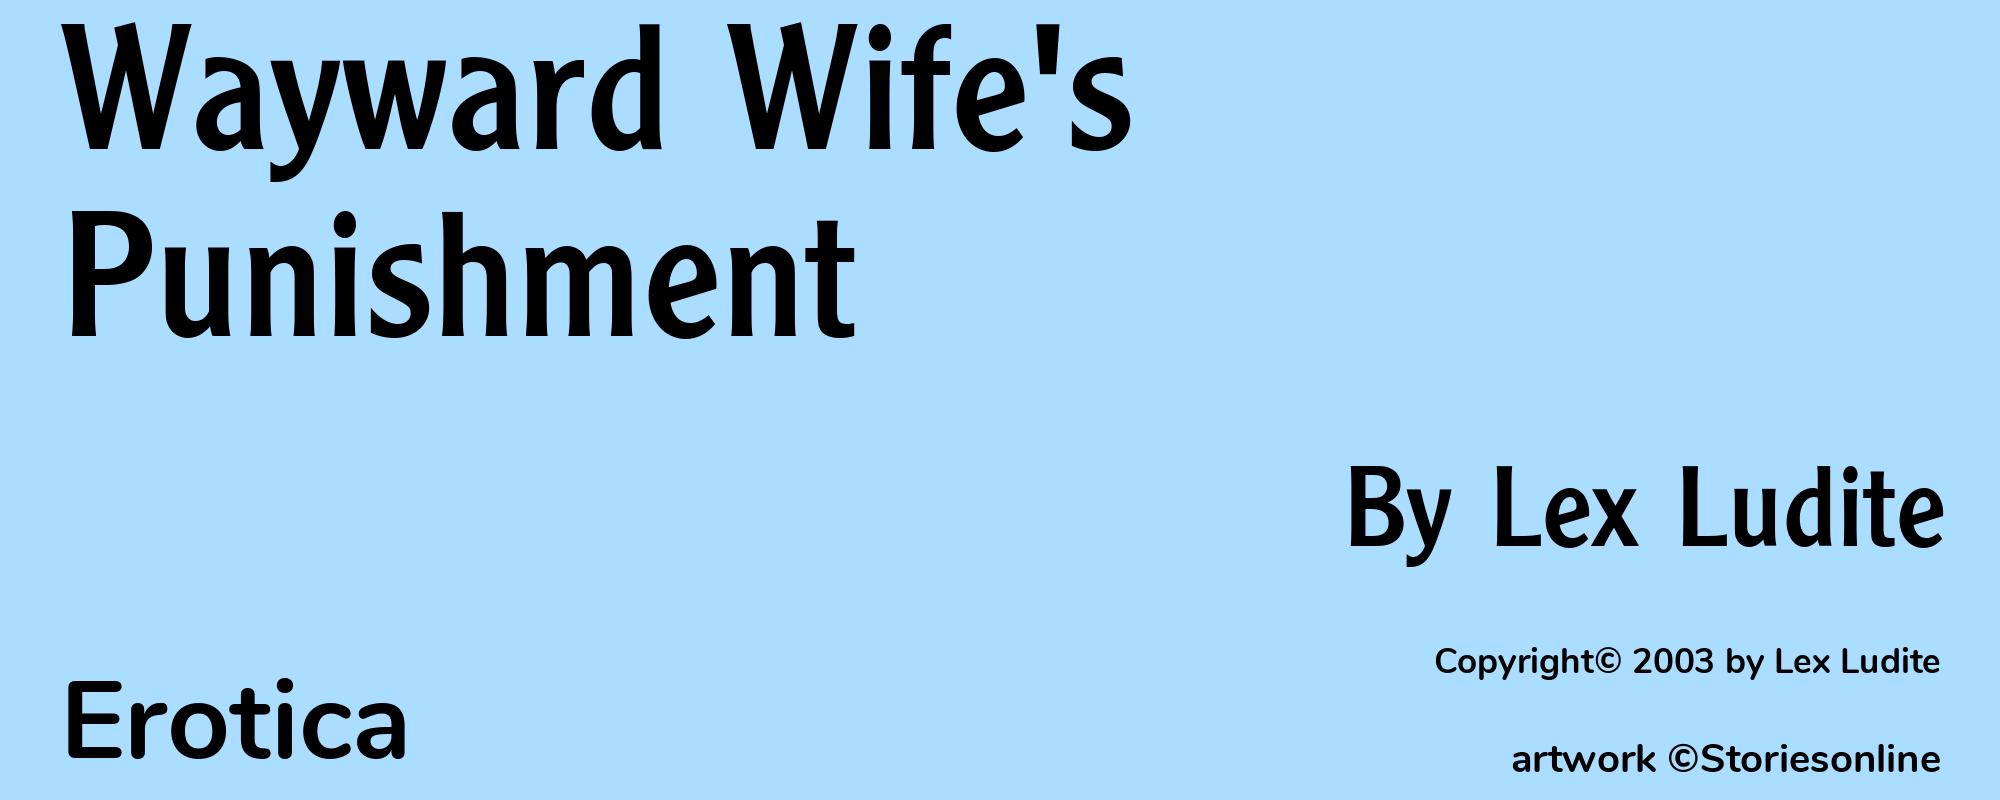 Wayward Wife's Punishment - Cover